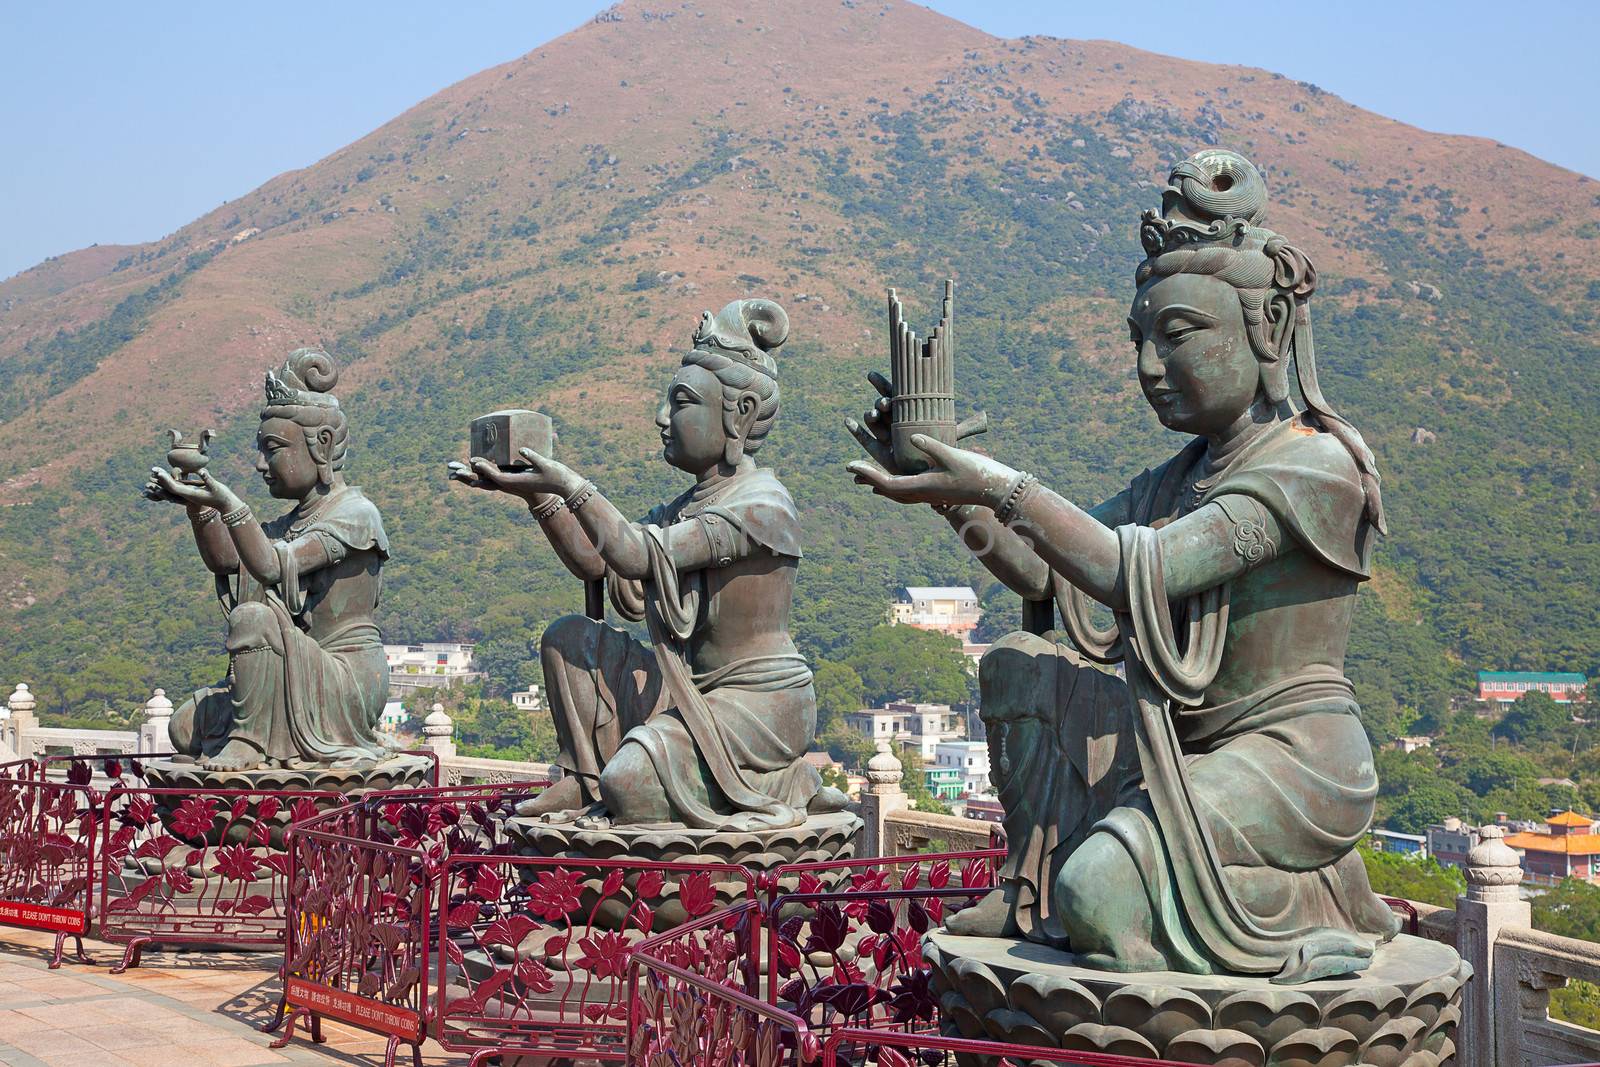 Giant Buddha complex on the Lantau island (Hong Kong)